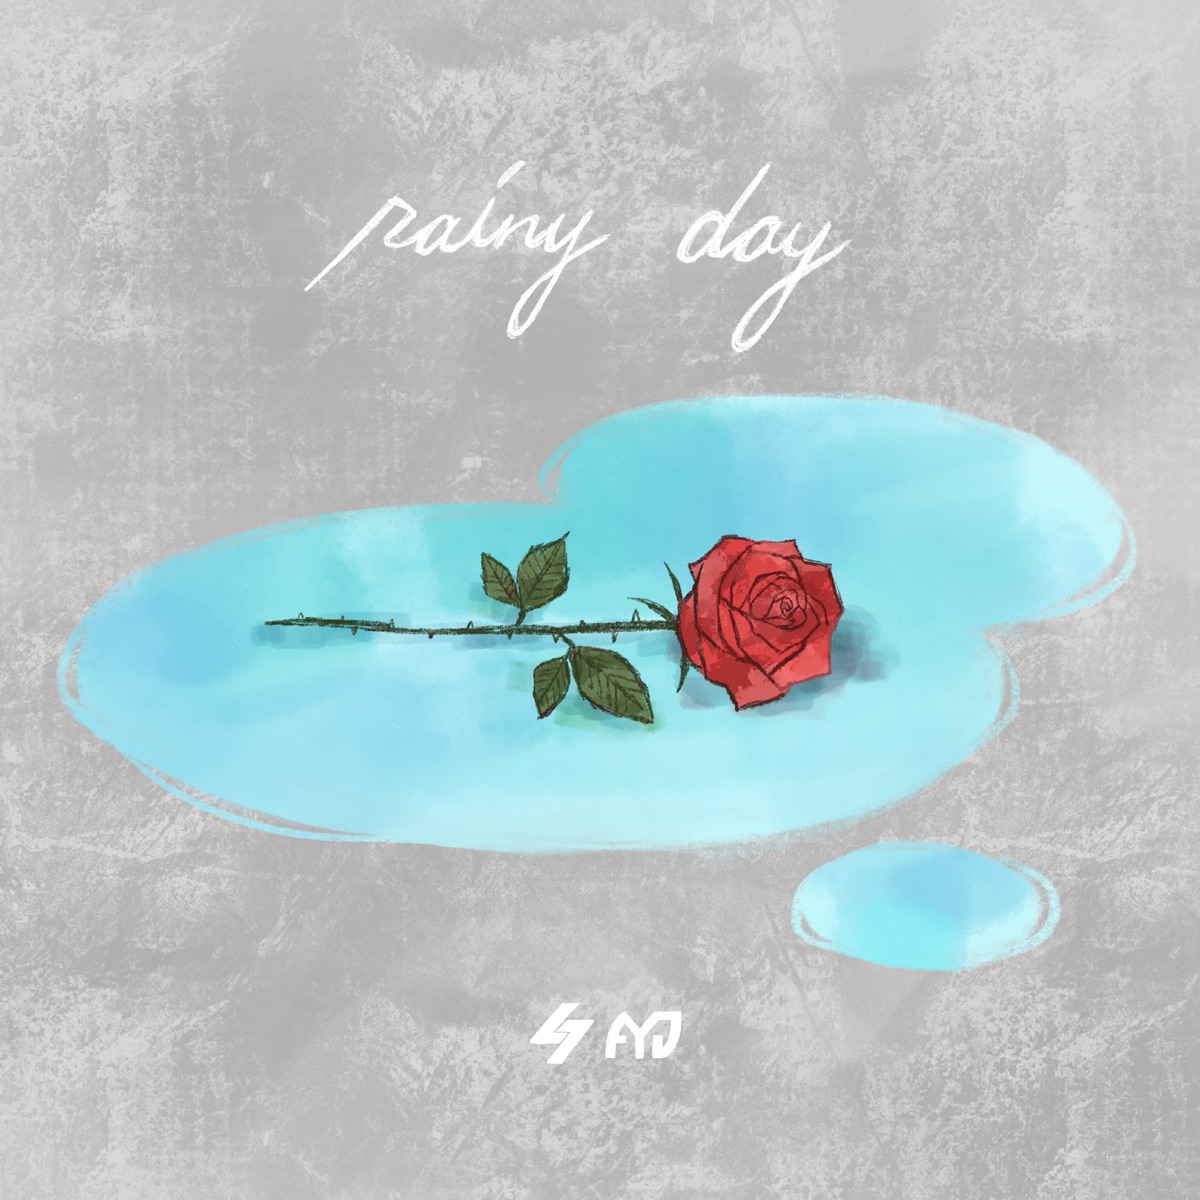 『SG - rainy day』収録の『rainy day』ジャケット